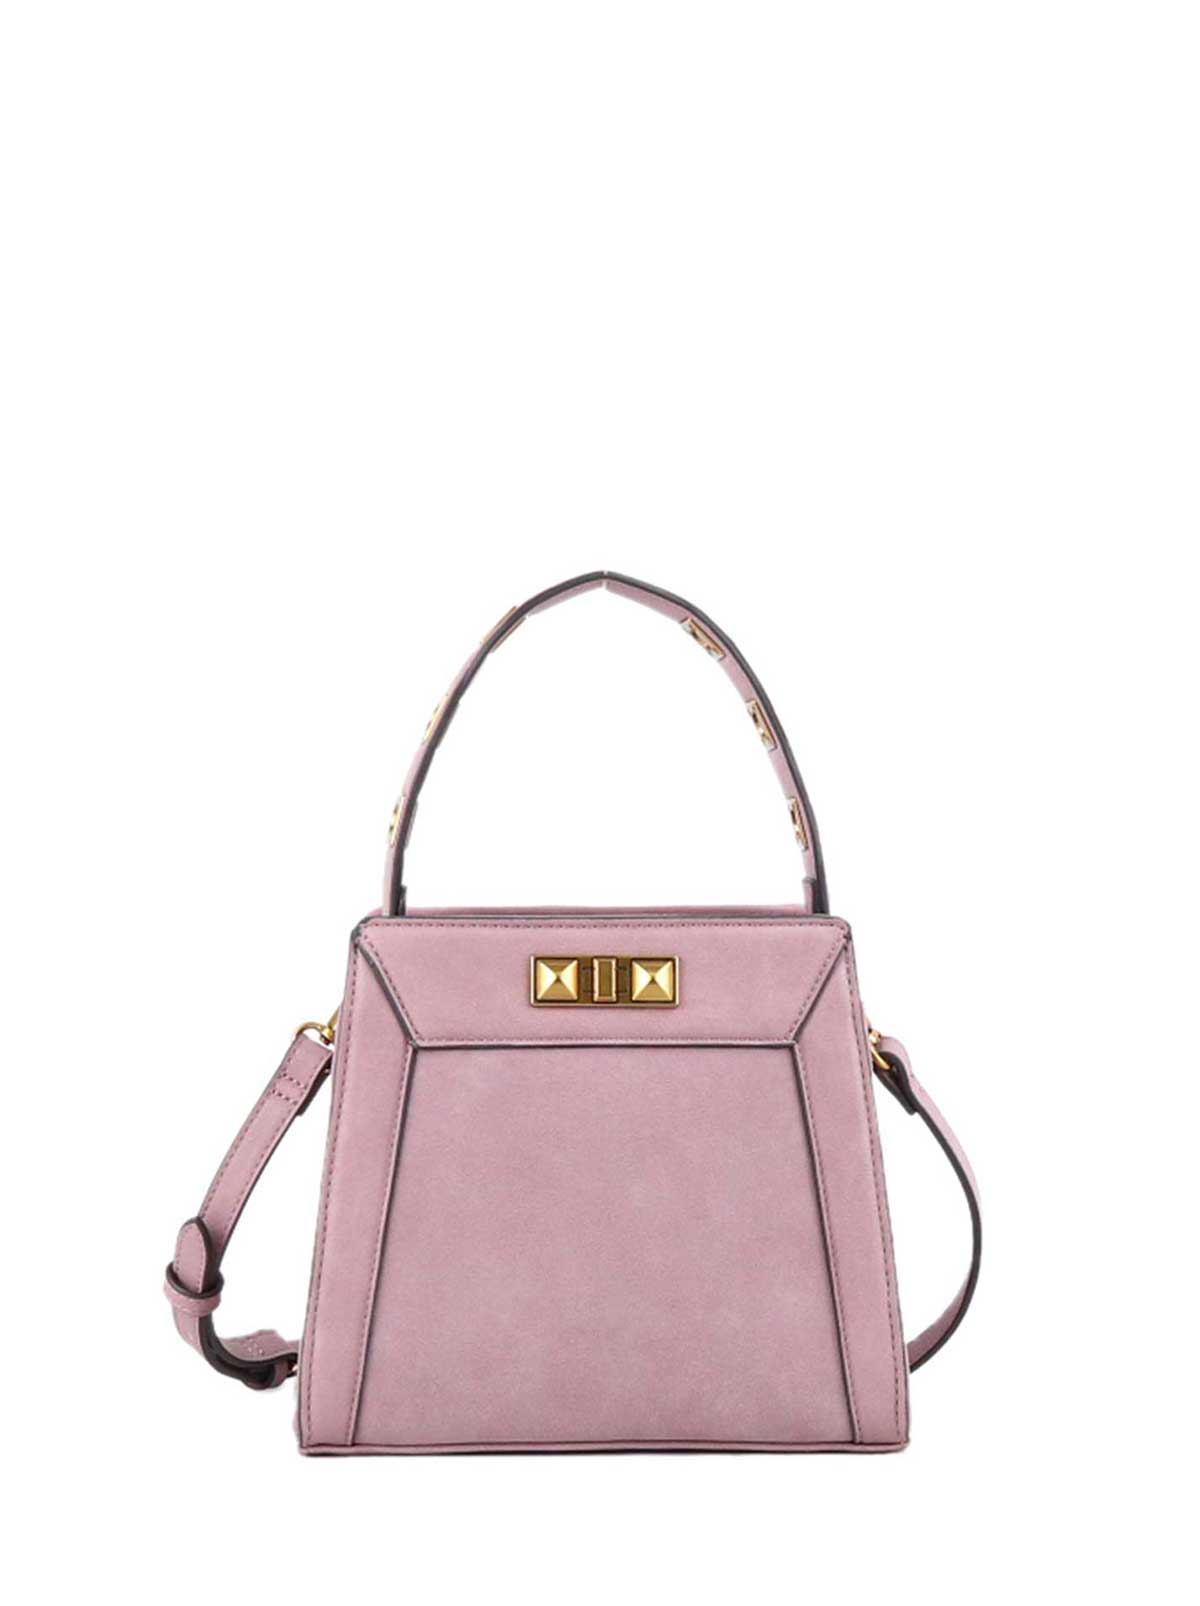 Jessica Simpson Womens Large Handbag Baby Pink Soft Leather Satchel Purse  Nwt | eBay